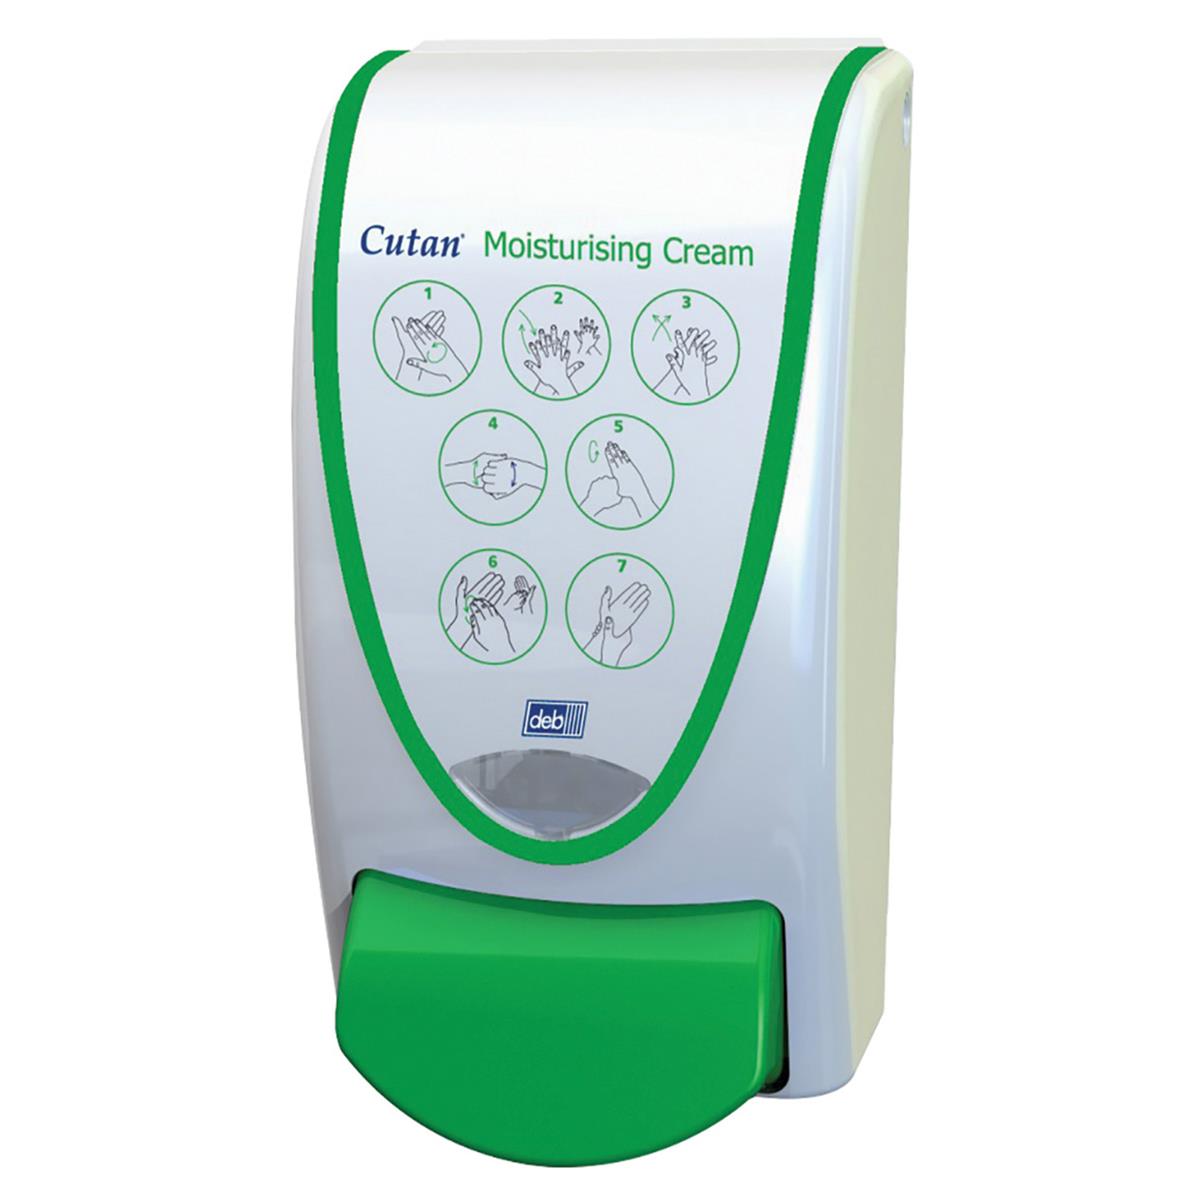 Cutan Moisturising Cream Dispenser 1L